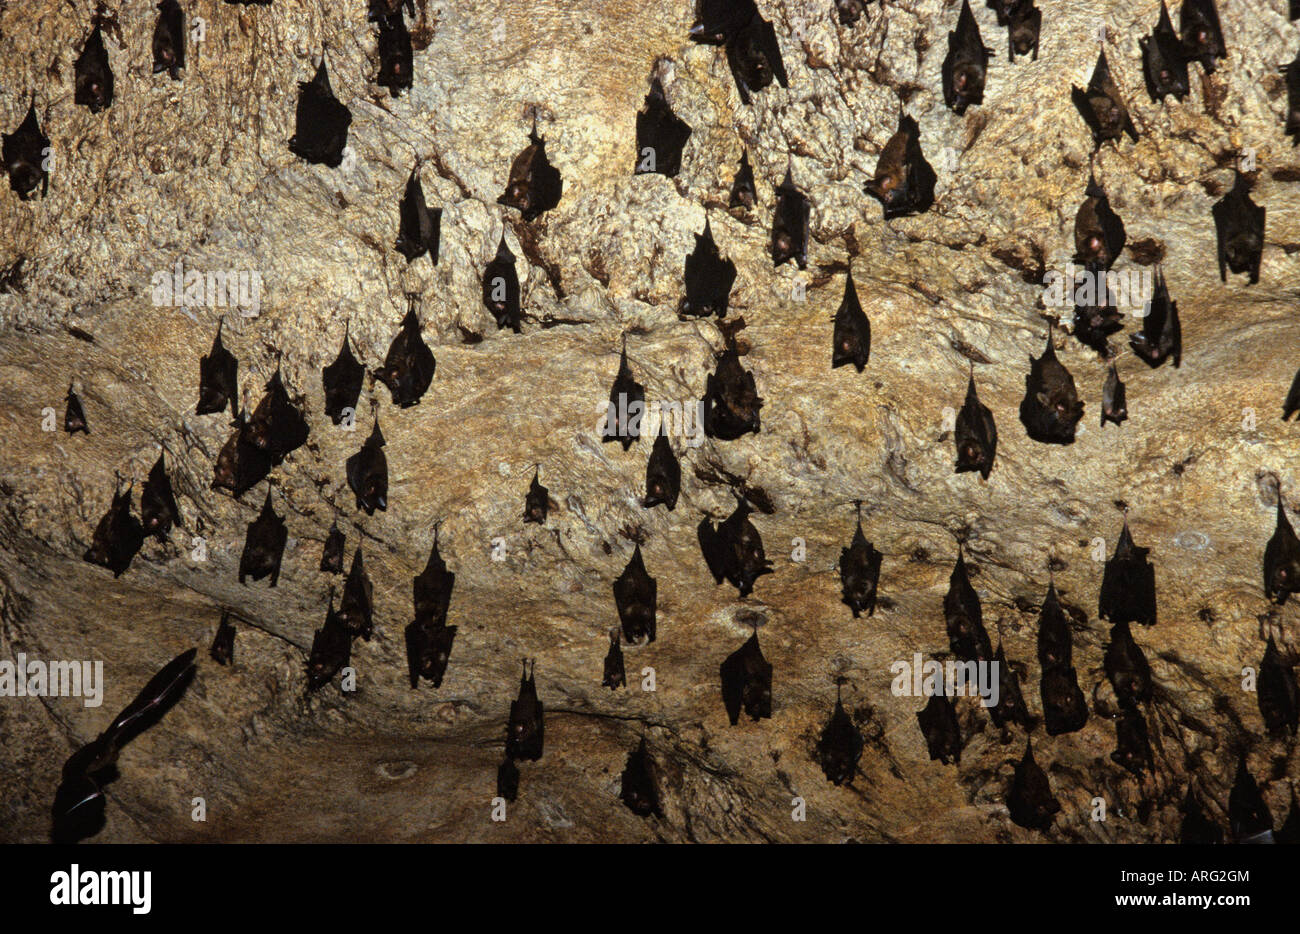 Flughunde in einer Höhle, der Insel Langkawi, Malaysia Stockfoto